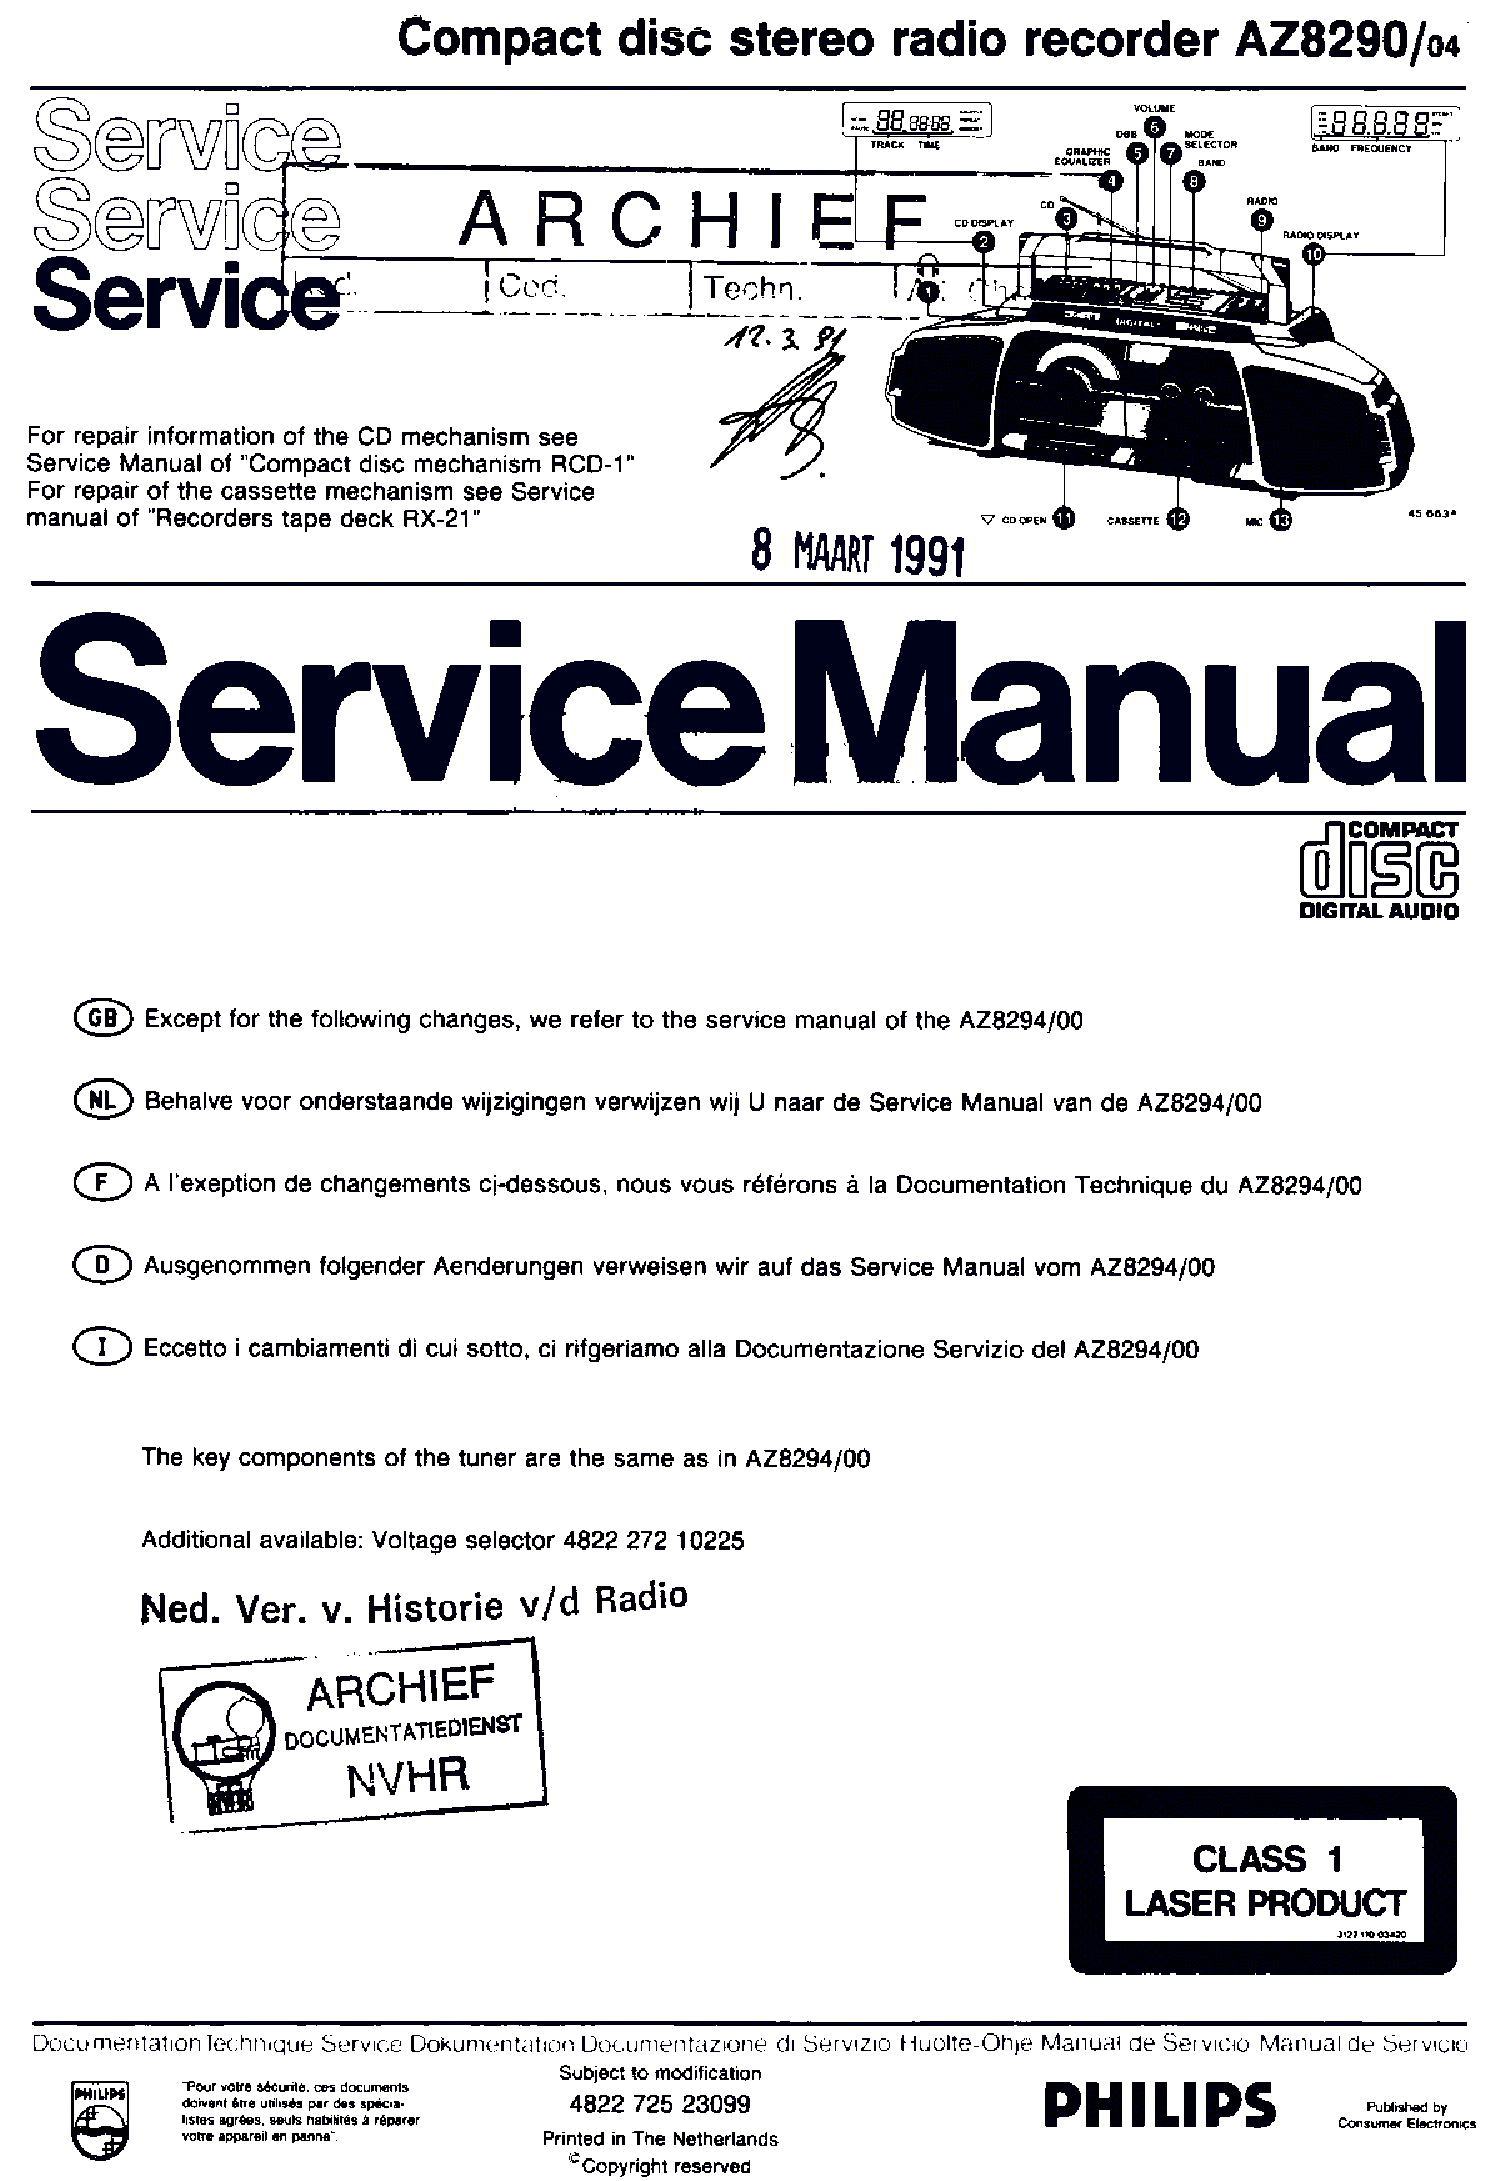 PHILIPS AZ8290-04 PORTABLE CD STEREO RADIO RECORDER 1991 SM service manual (1st page)